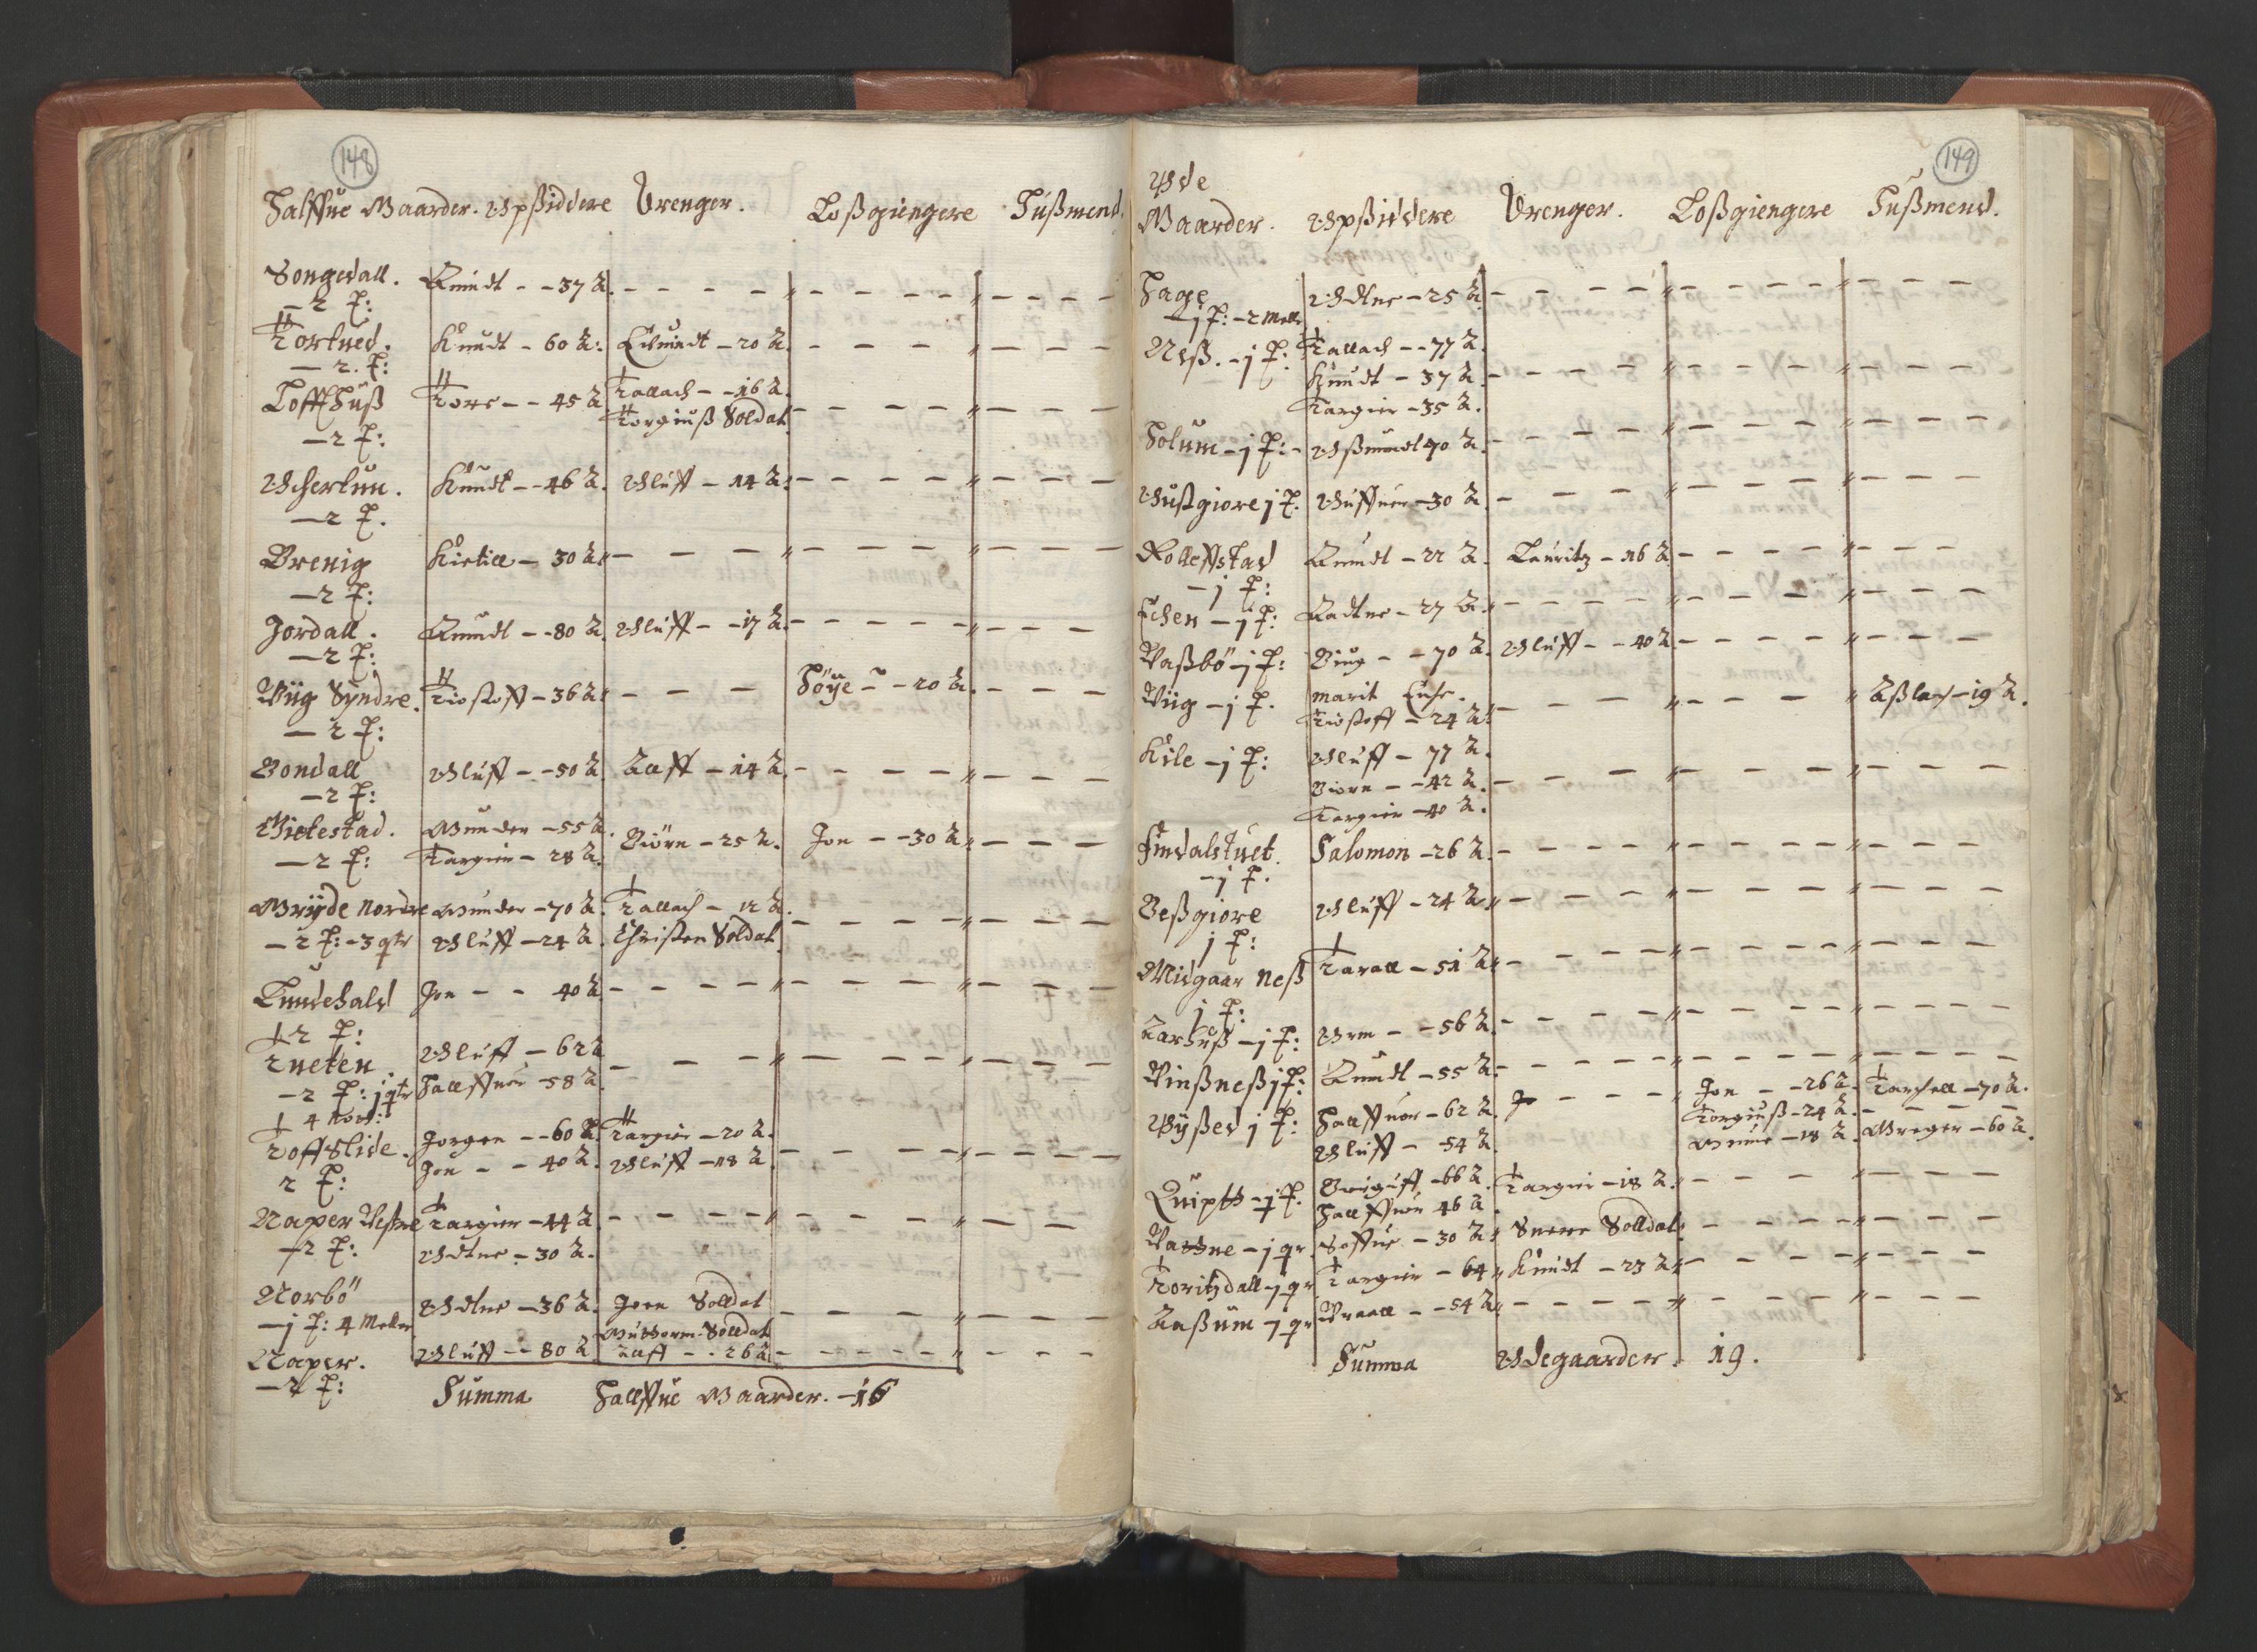 RA, Vicar's Census 1664-1666, no. 12: Øvre Telemark deanery, Nedre Telemark deanery and Bamble deanery, 1664-1666, p. 148-149